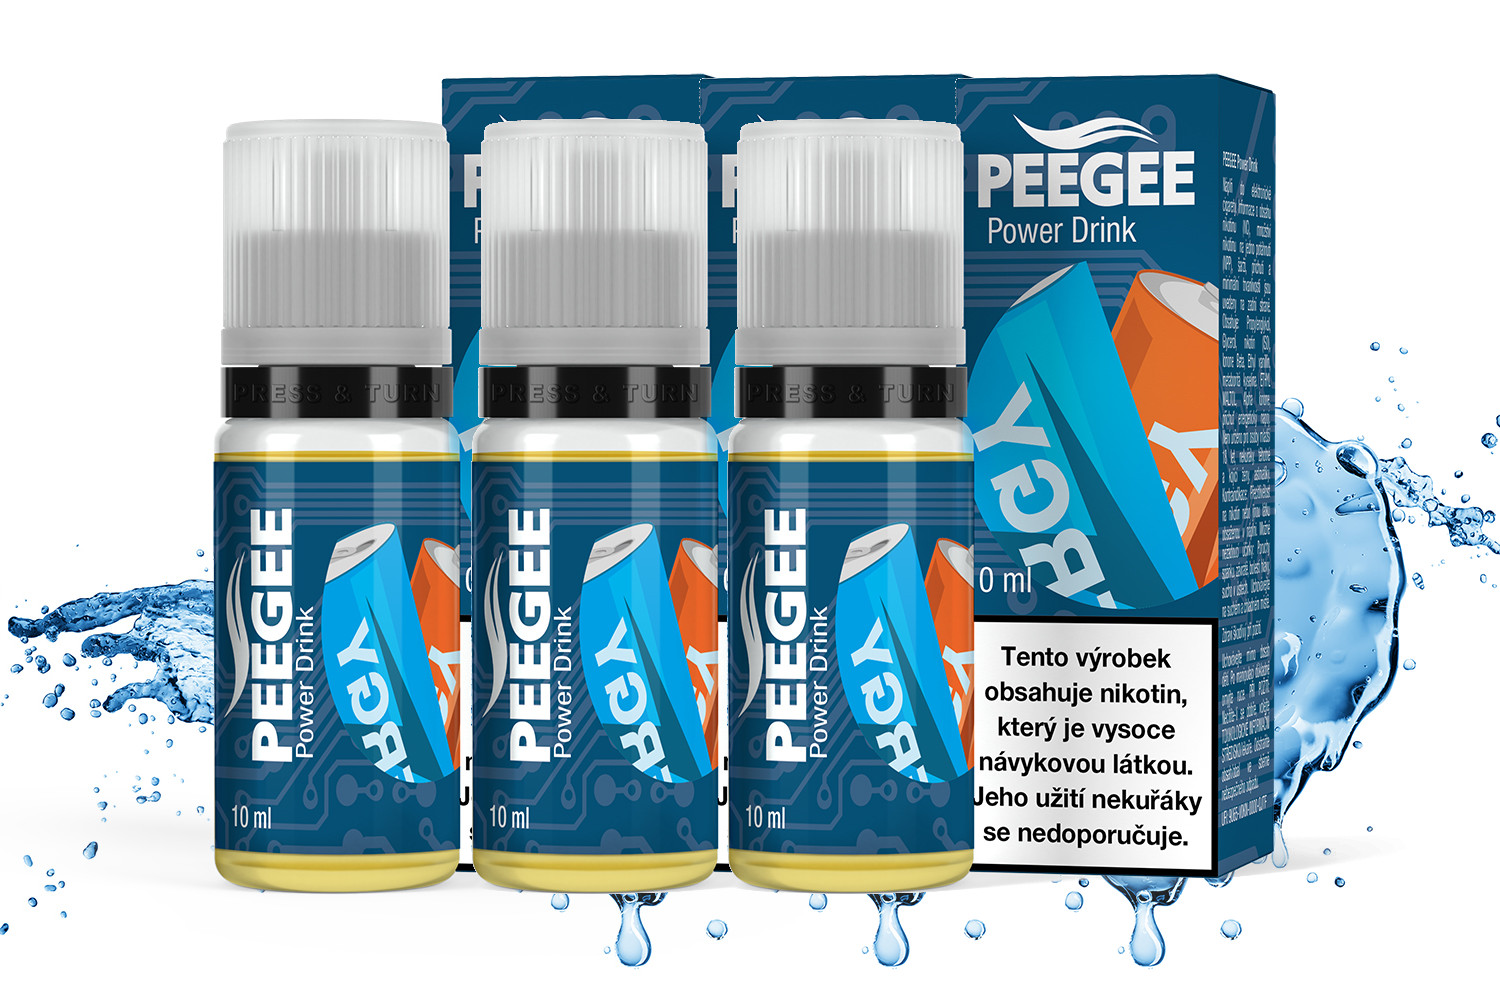 PEEGEE - Energetický nápoj (Power Drink) 3x10ml Obsah nikotinu: 12mg